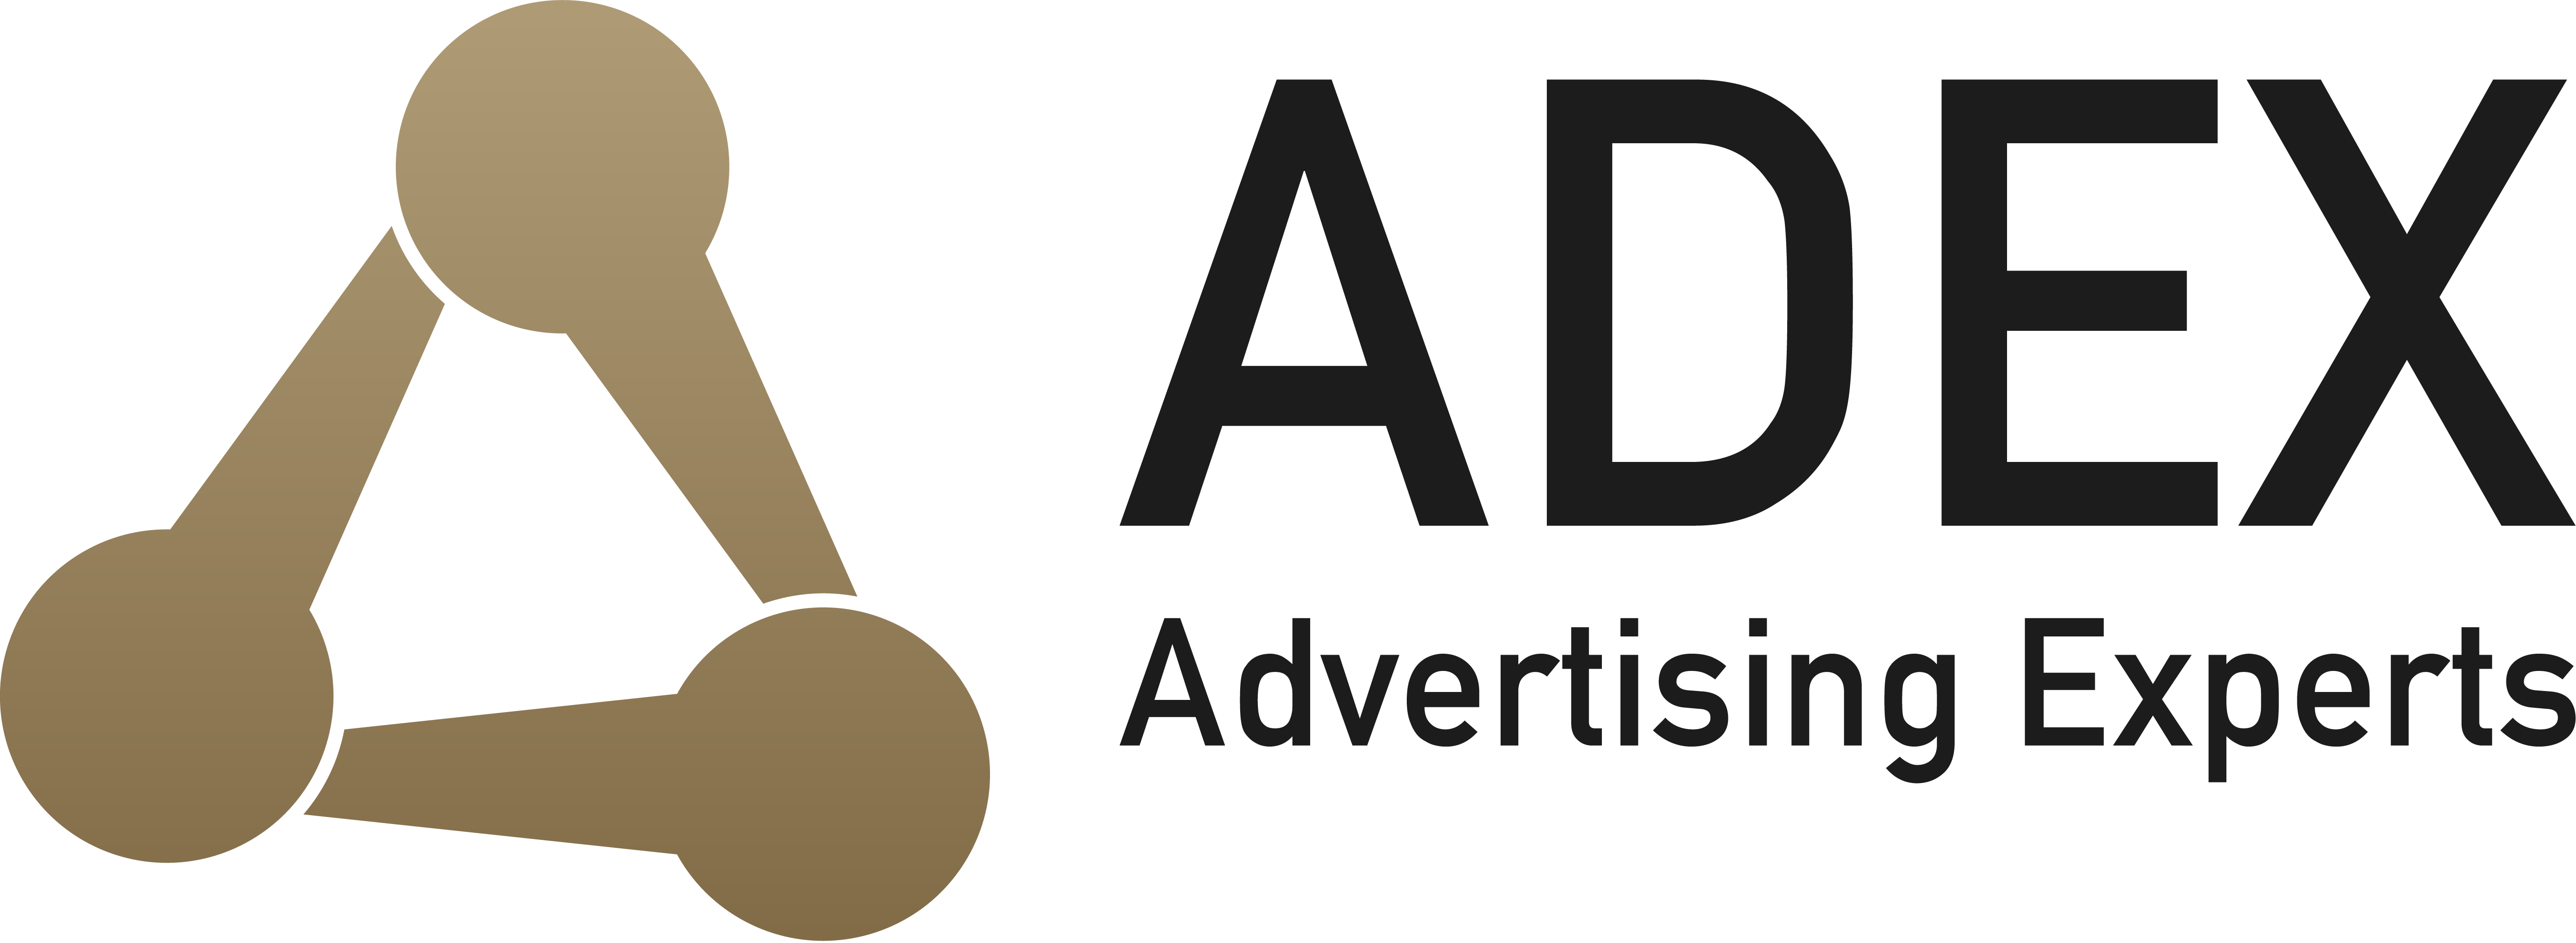 adex-car-dealerships-online-advertising